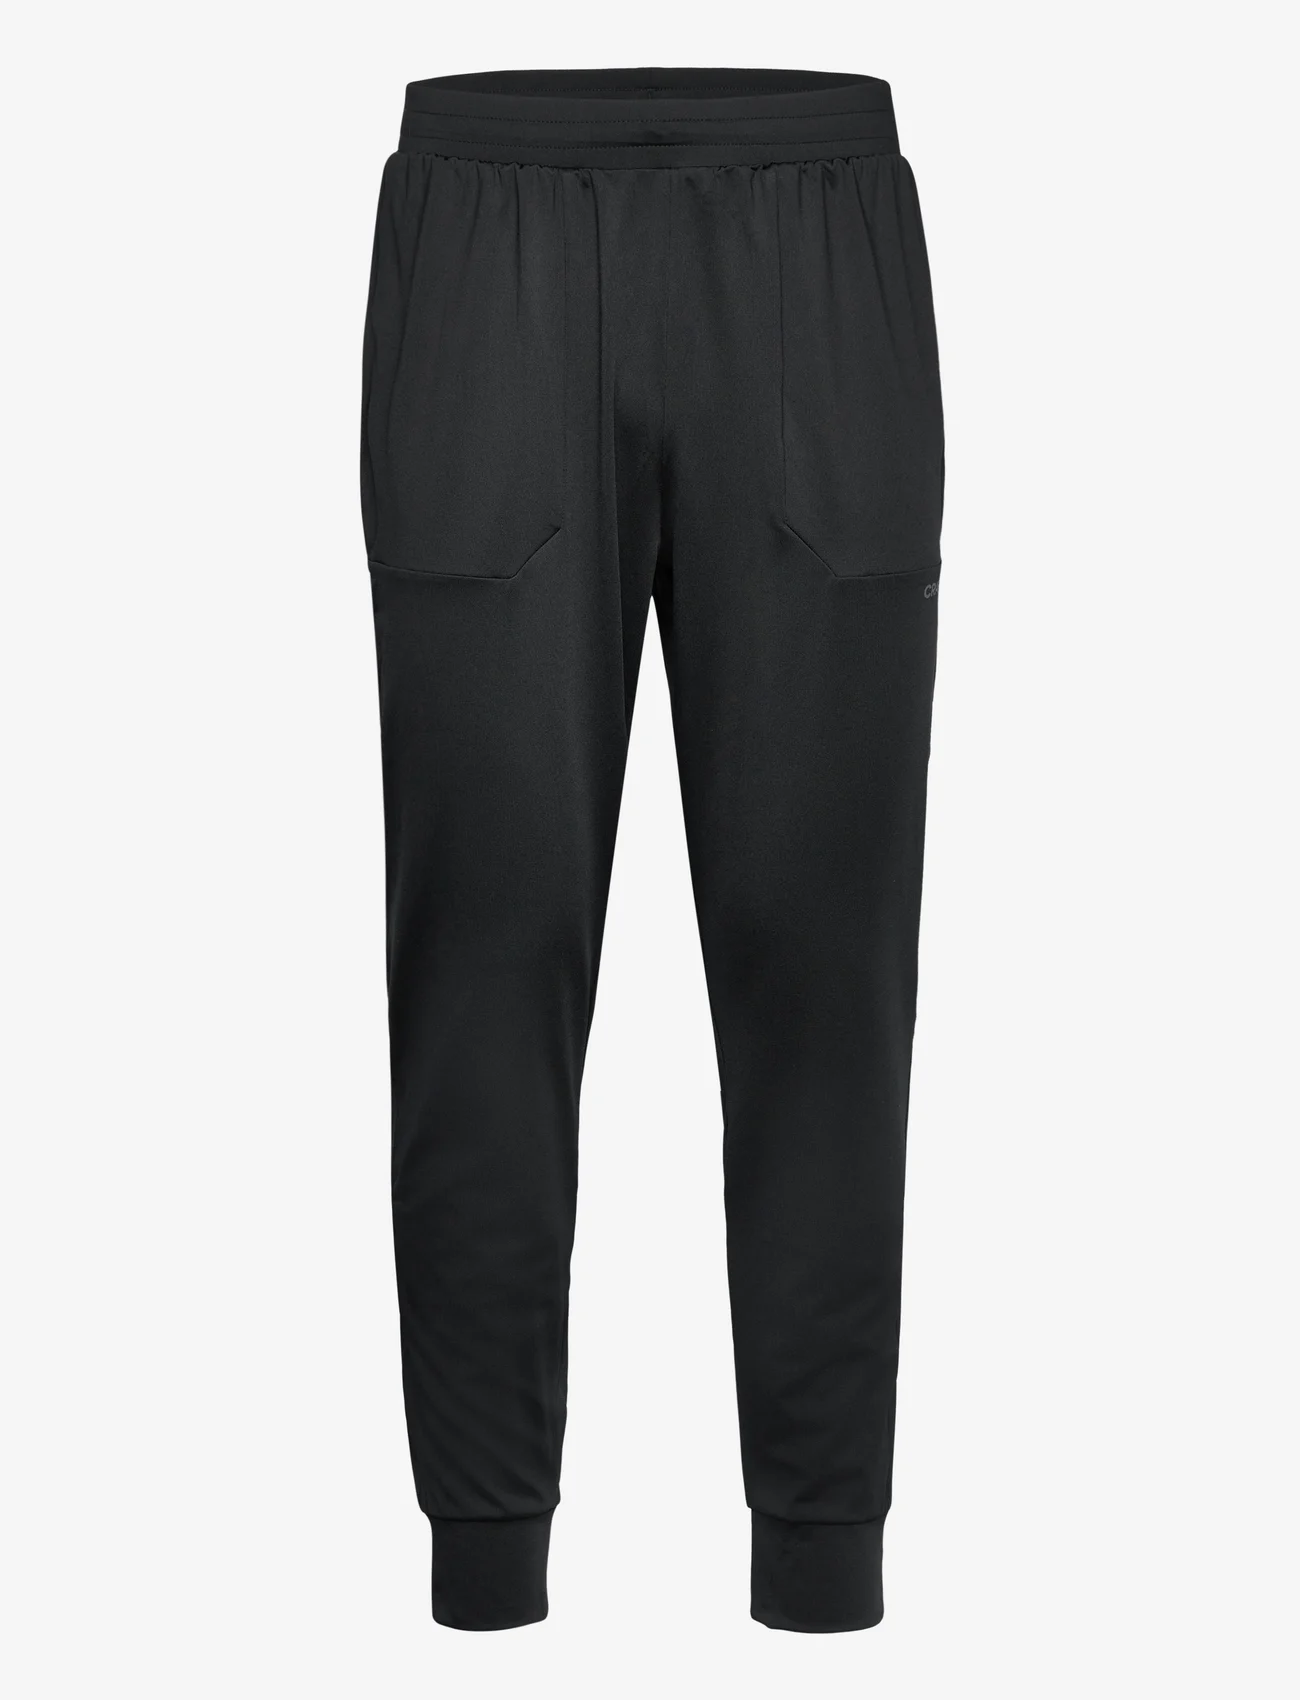 Craft - Adv Tone Jersey Pant M - sporthosen - black - 0